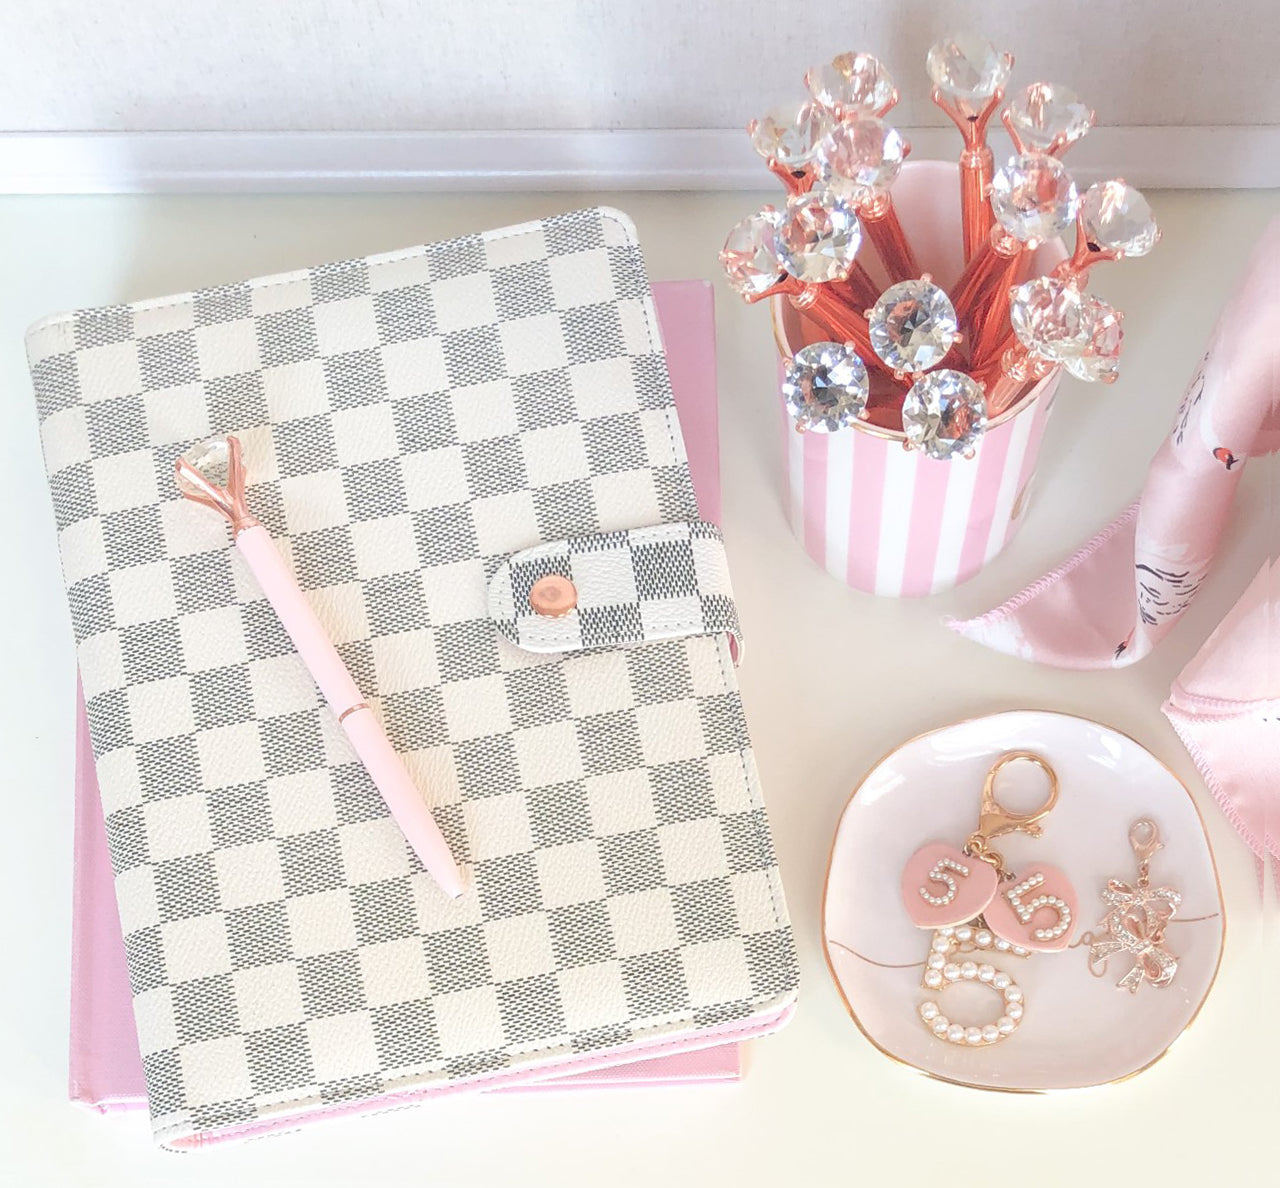 Jazzy Pink Checkered Planner Agenda - White - Savvy Blake LLC